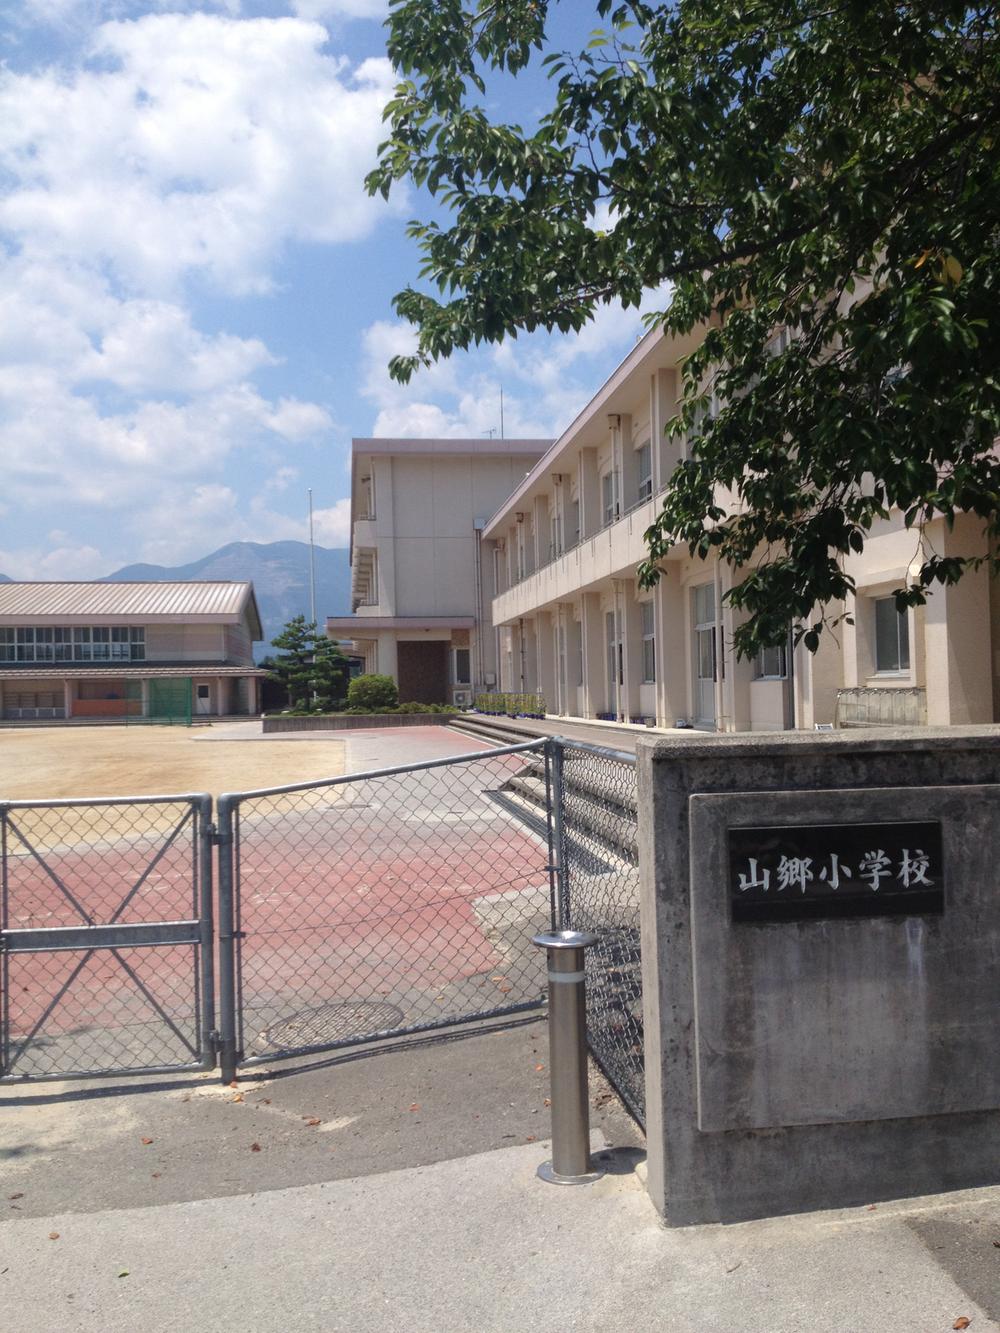 Primary school. 940m to Inabe Tateyama Township Elementary School